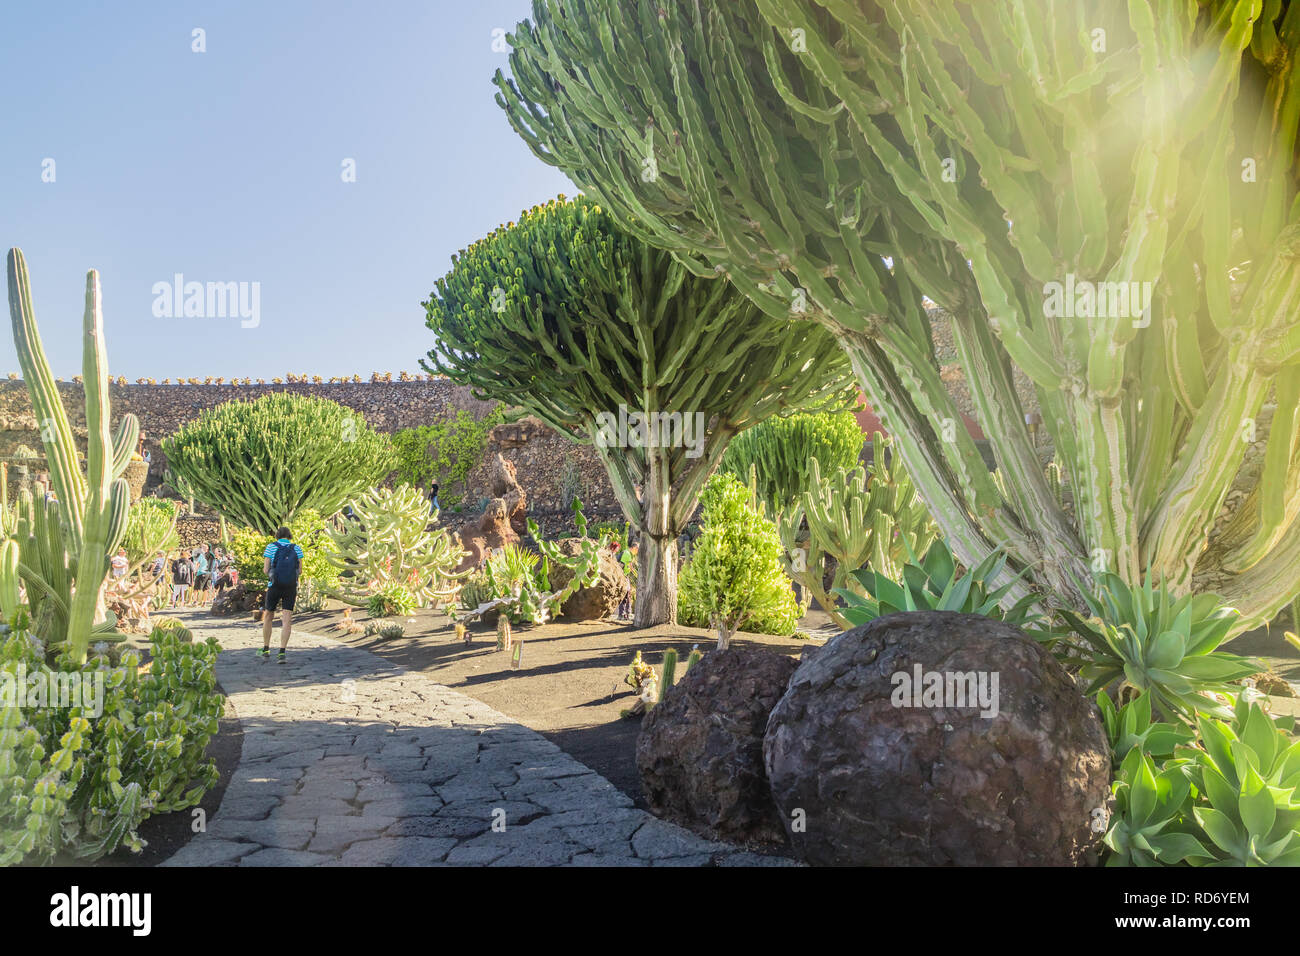 Popular Tourists location Jardin de Cactus (Cactus Garden) in Guatiza, Lanzarote, Canary Islands, Las Palmas, Spain Stock Photo